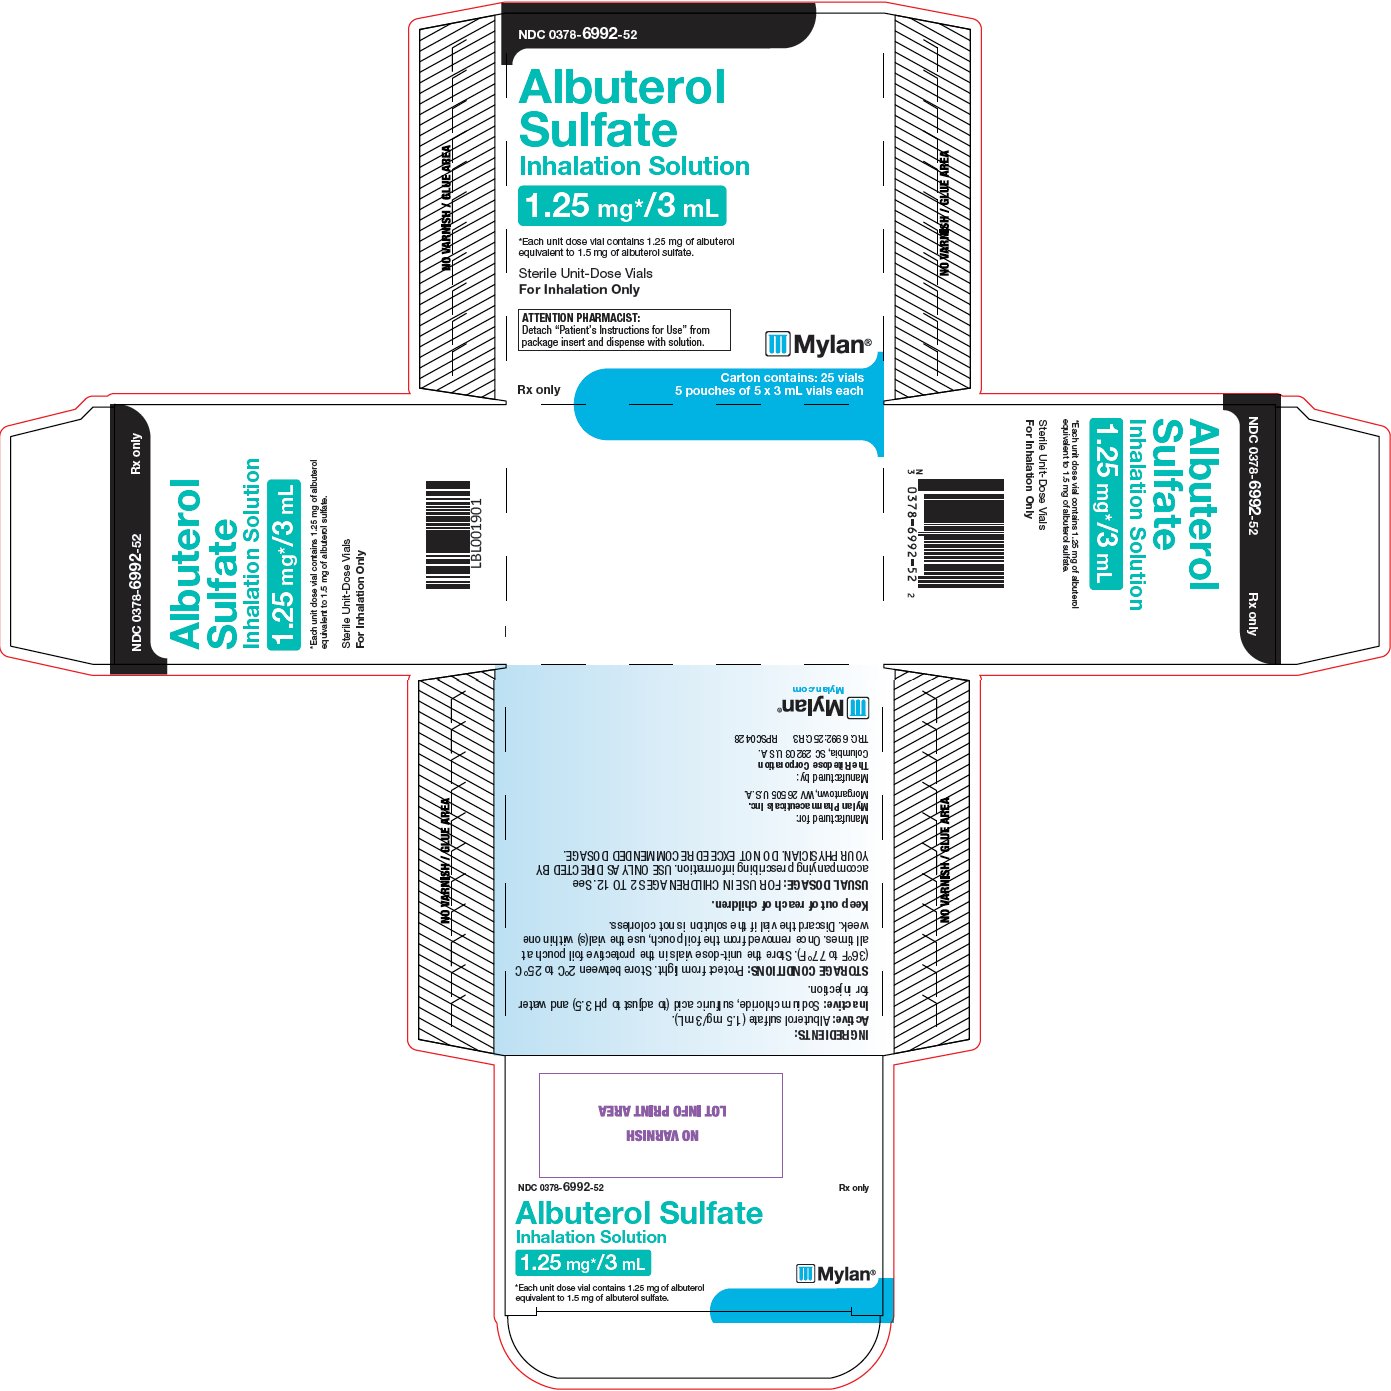 Albuterol Sulfate Inhalation Solution 1.25 mg/3 mL Carton Label